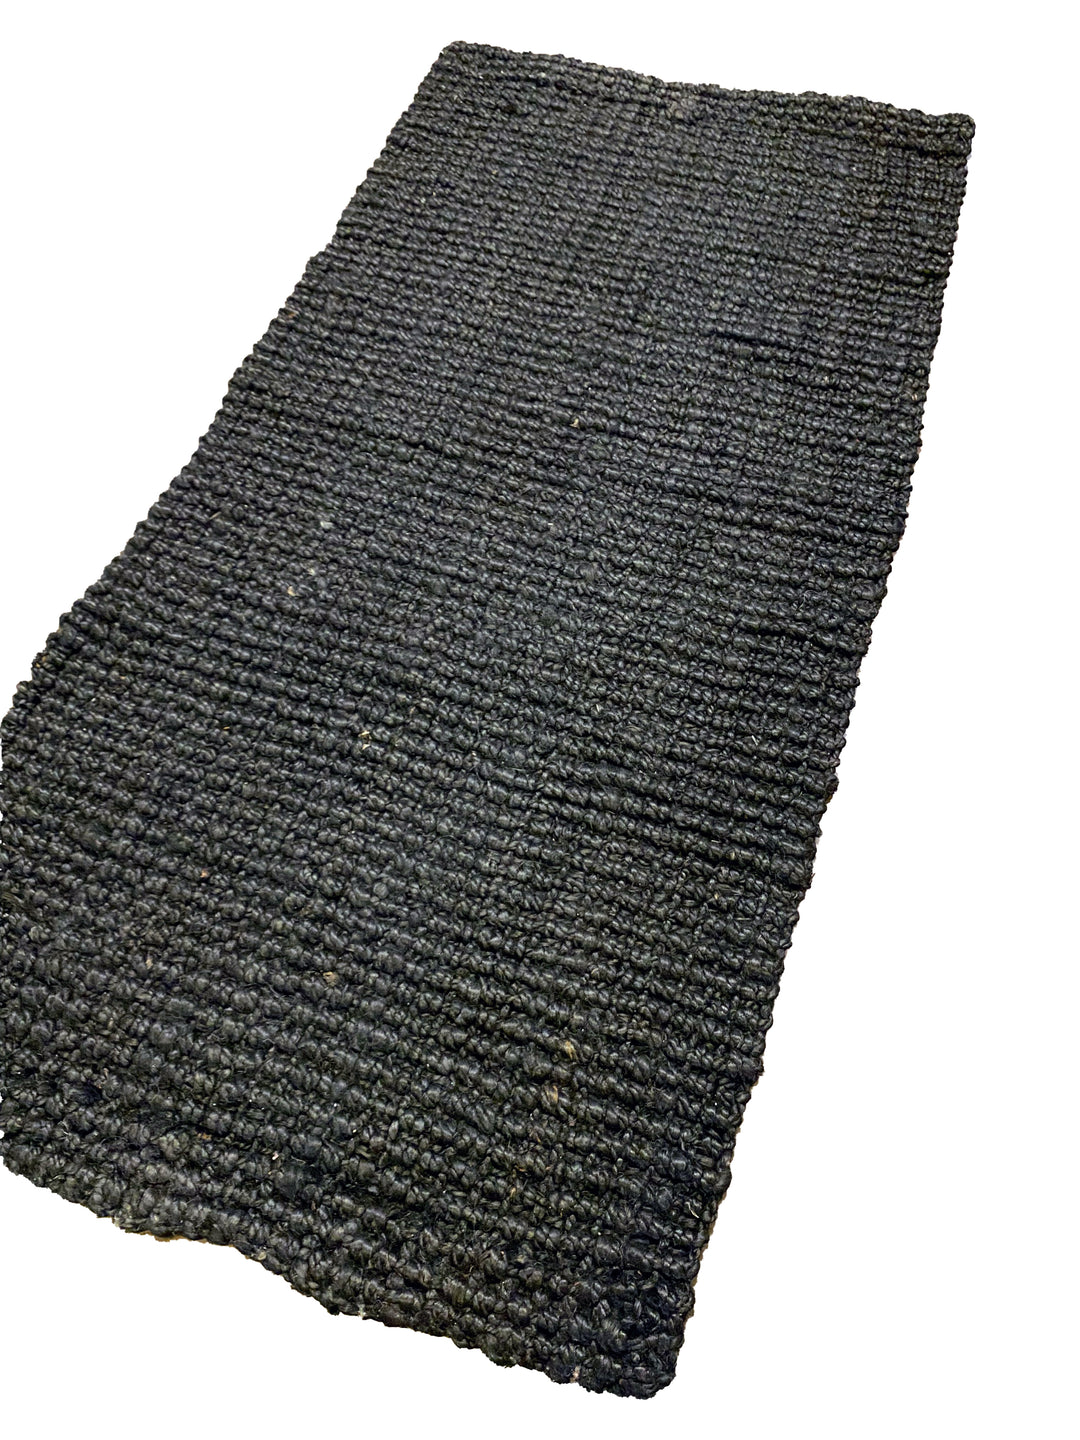 Kanan - Size: 4.8 x 2.4 - Imam Carpet Co